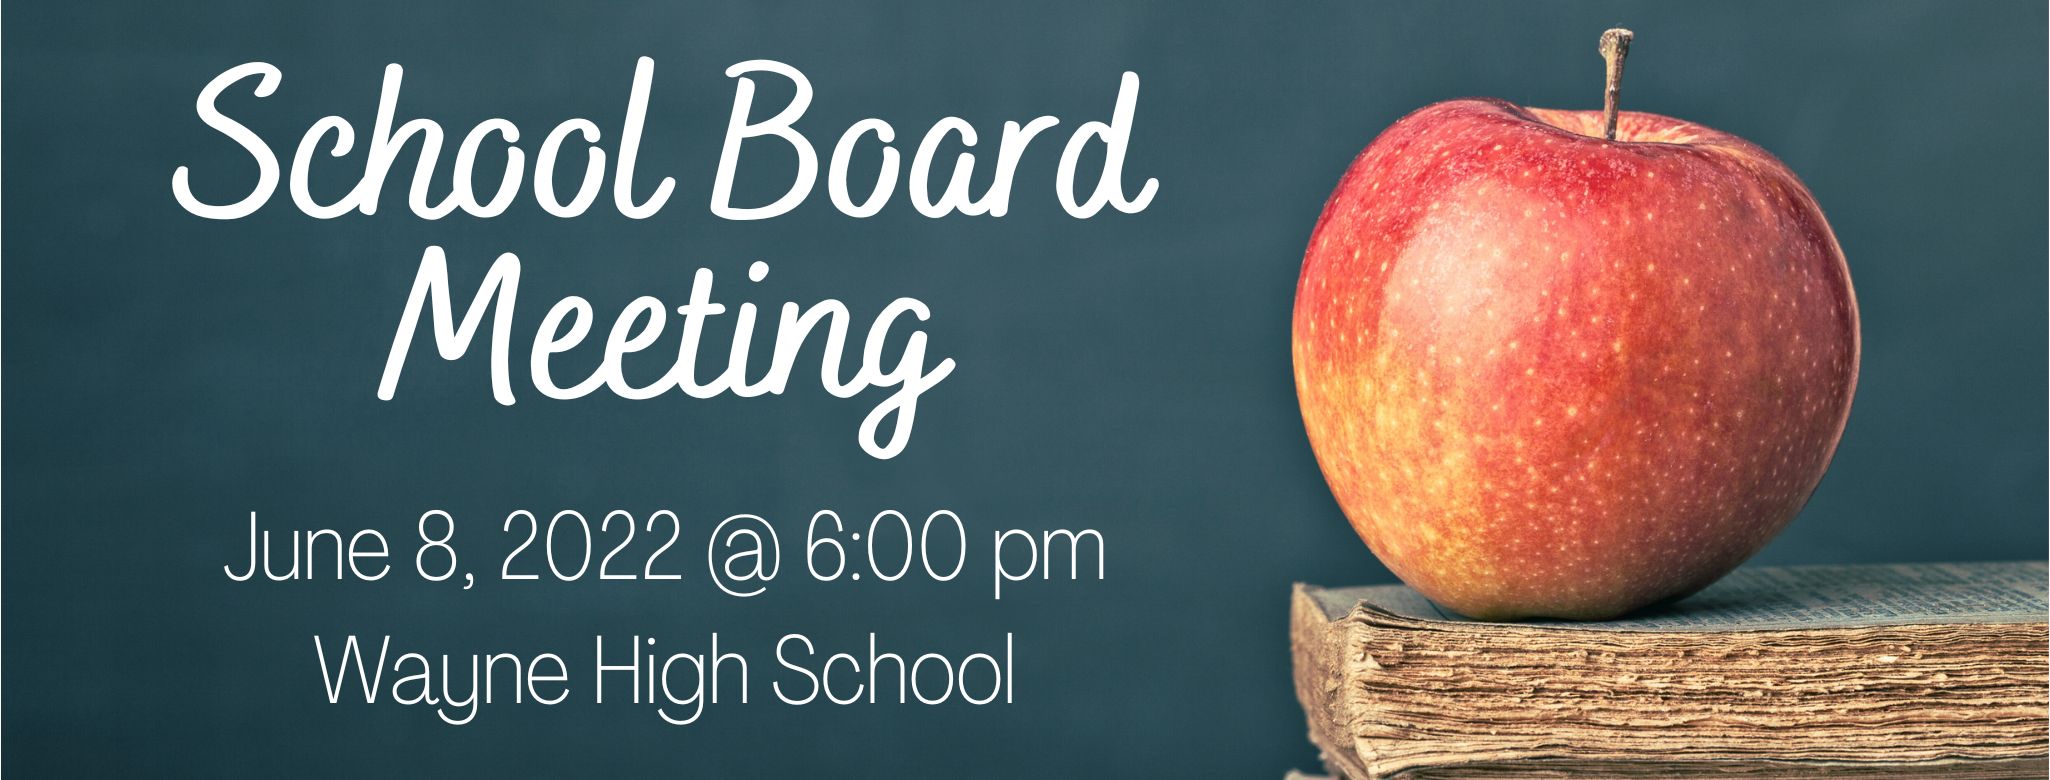 School Board Meeting 2